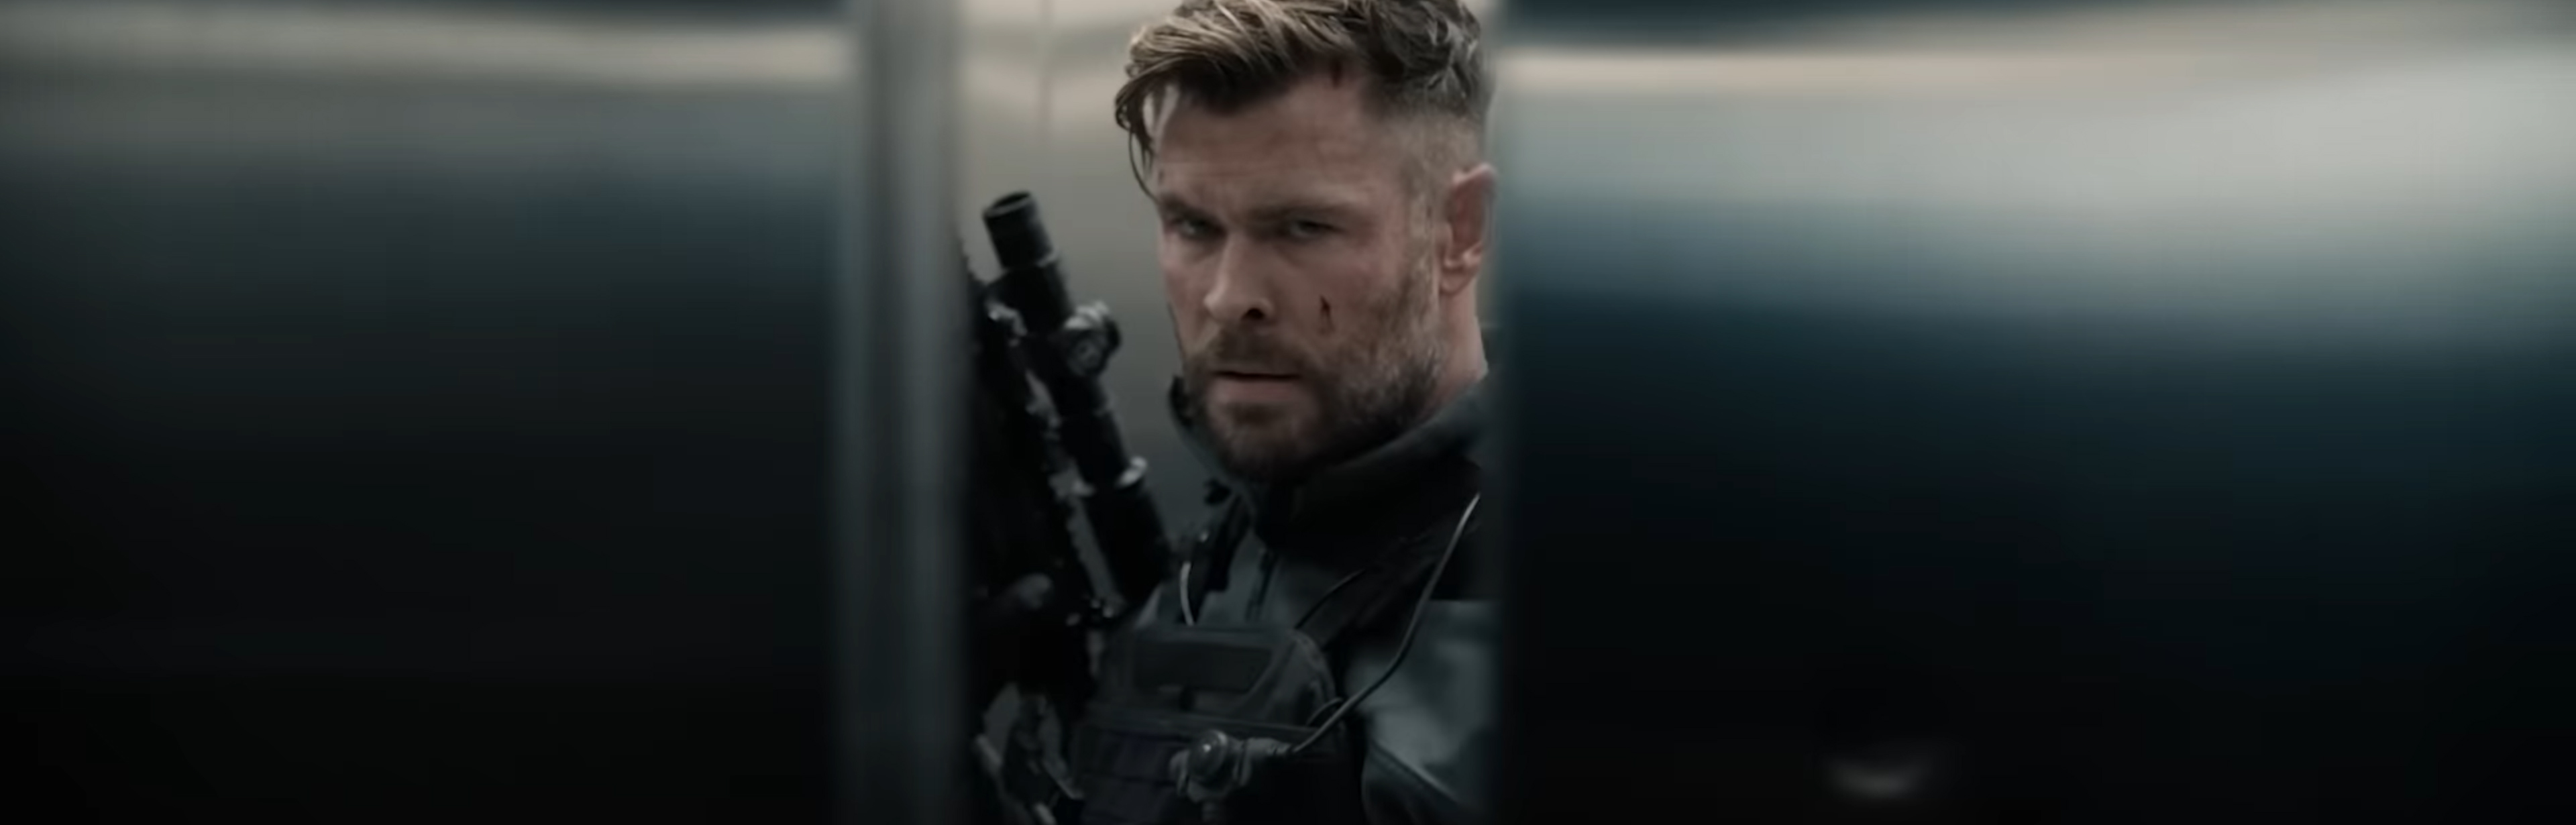 Chris Hemsworth stare down in an elevator.